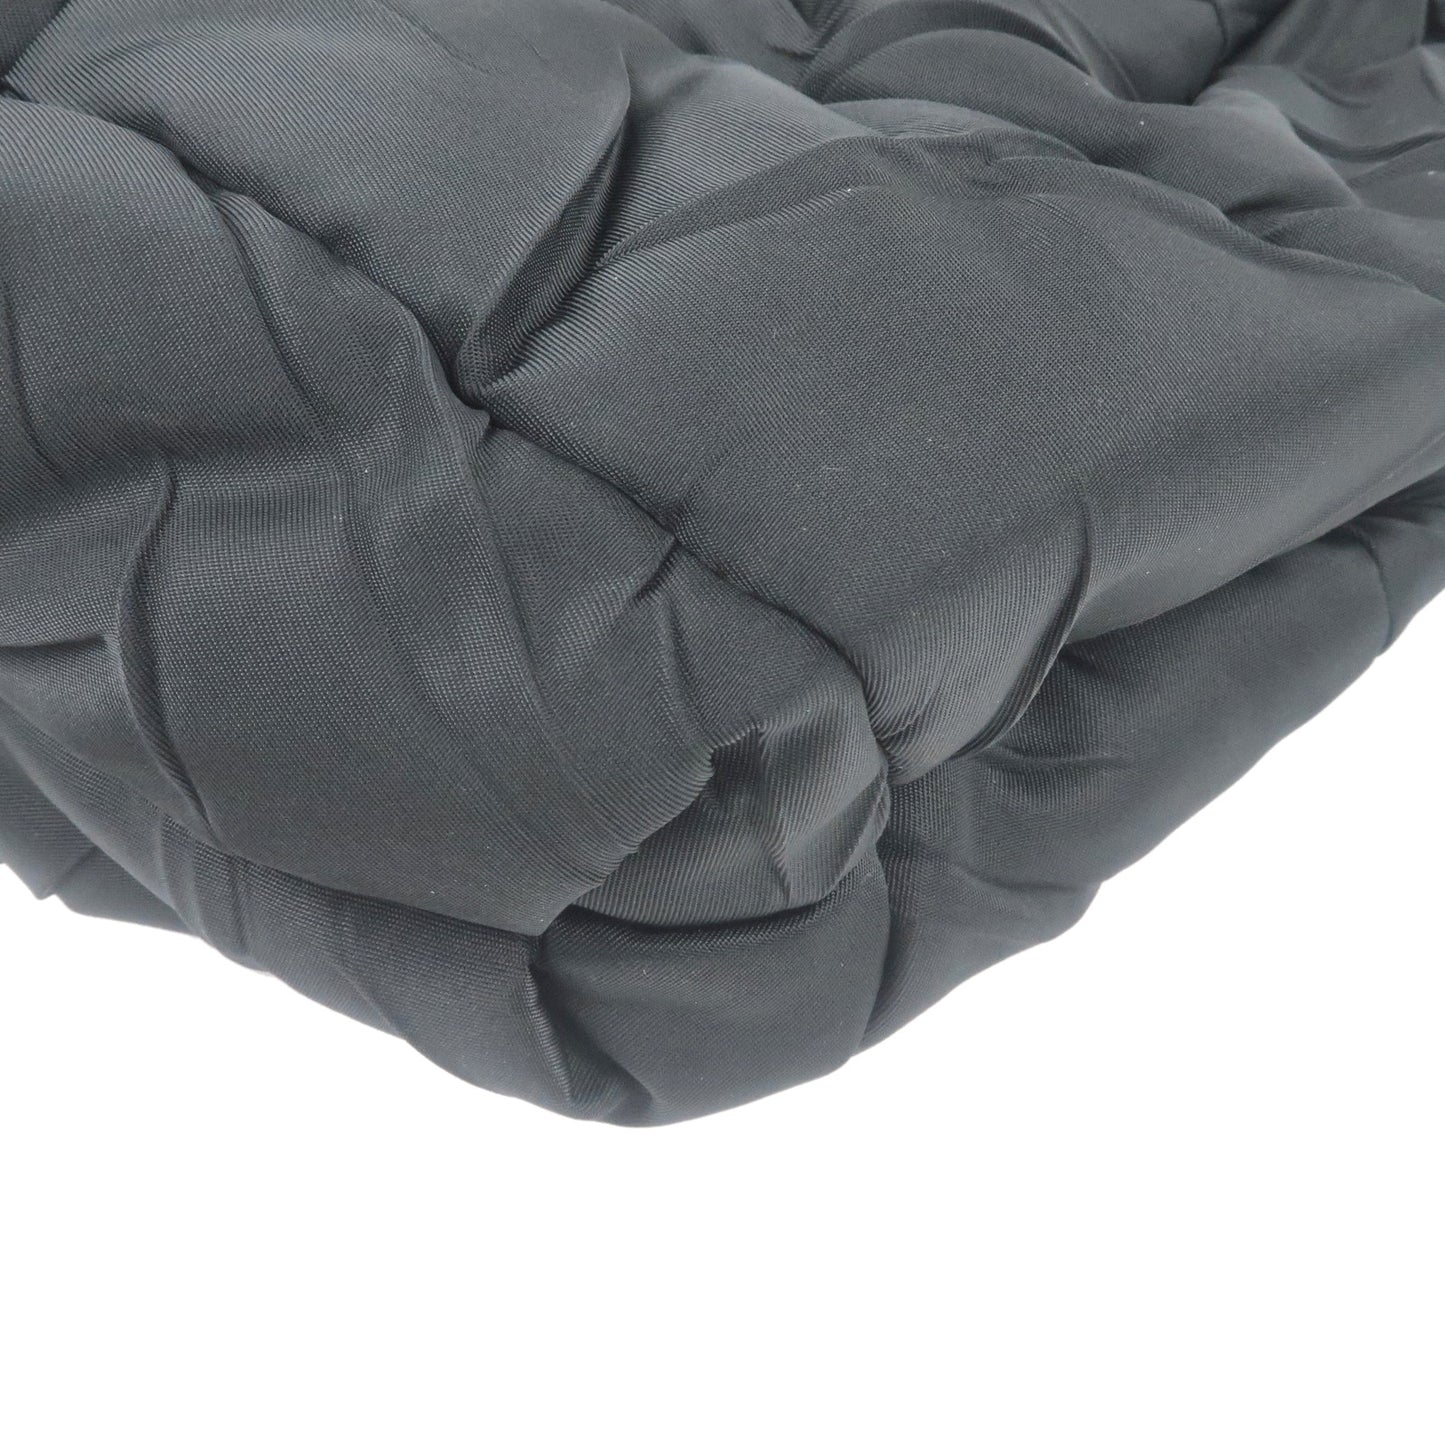 PRADA Nylon Leather Shoulder Bag Black NERO